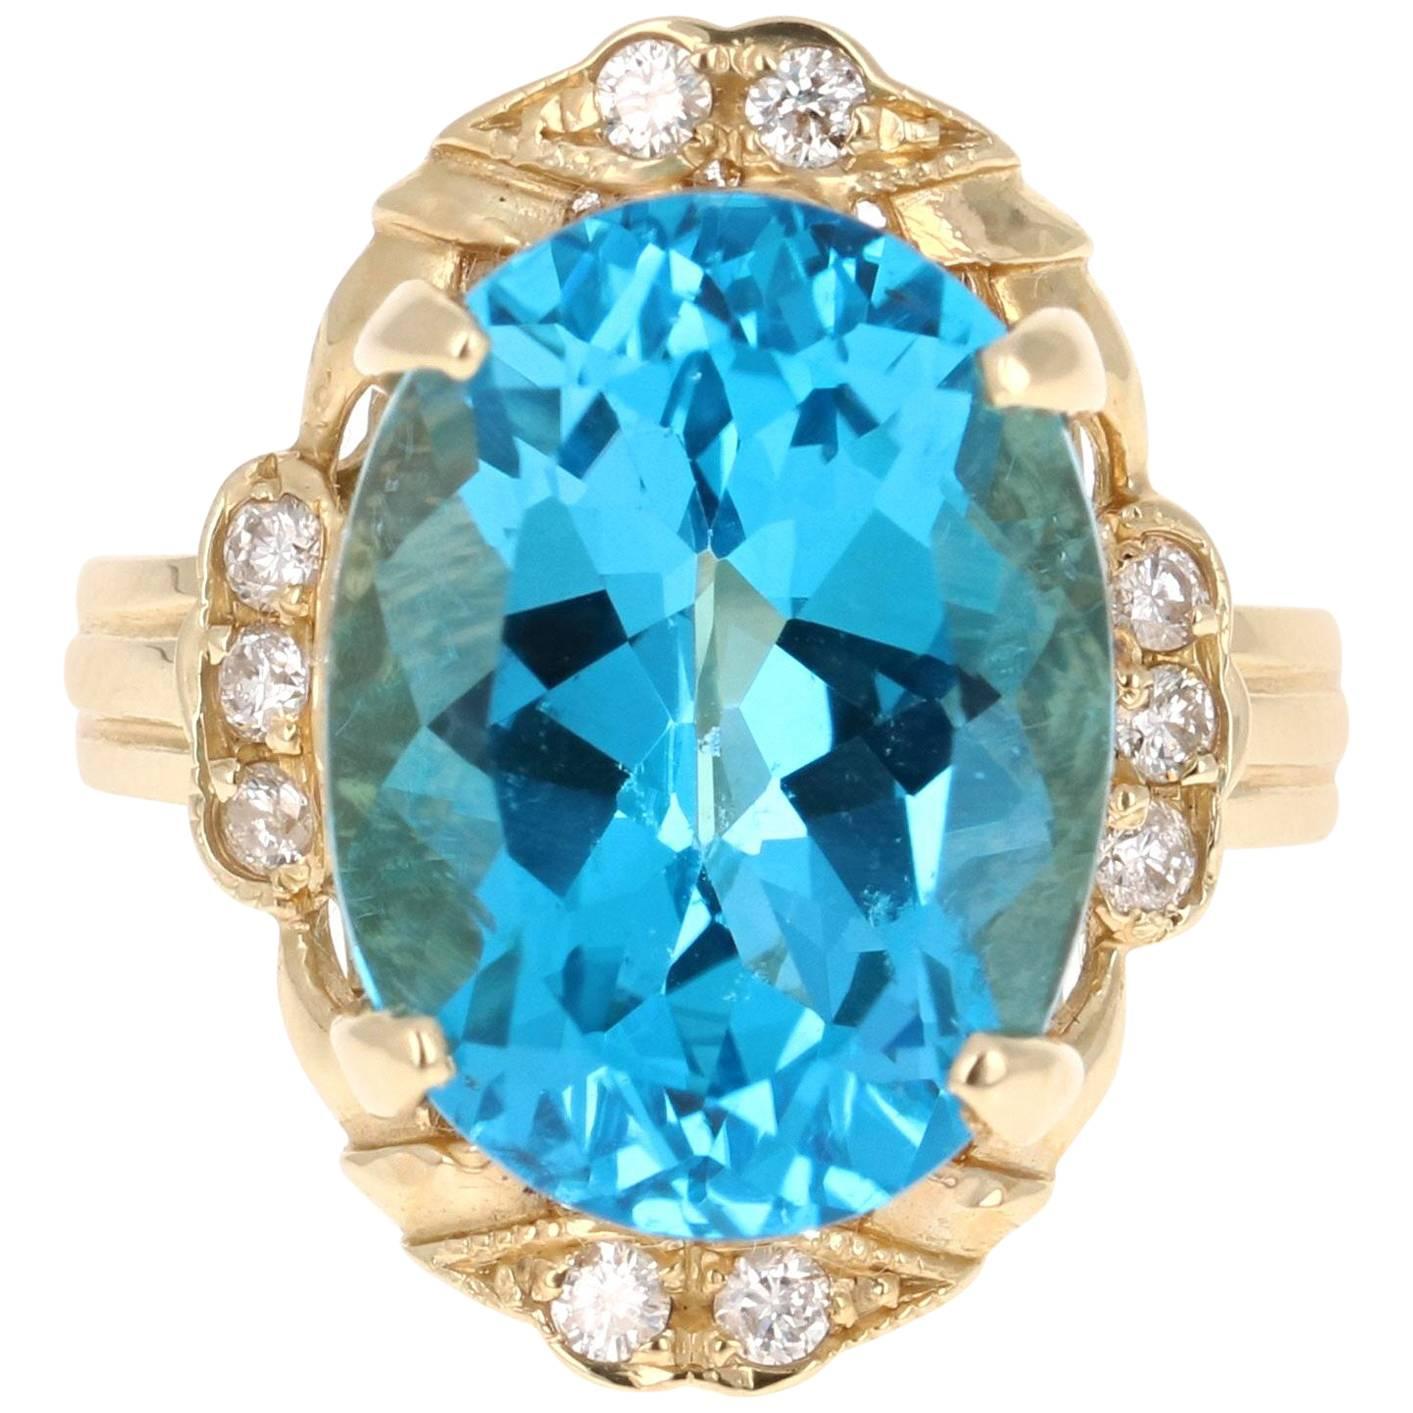 12.54 Carat Blue Topaz and Diamond Ring